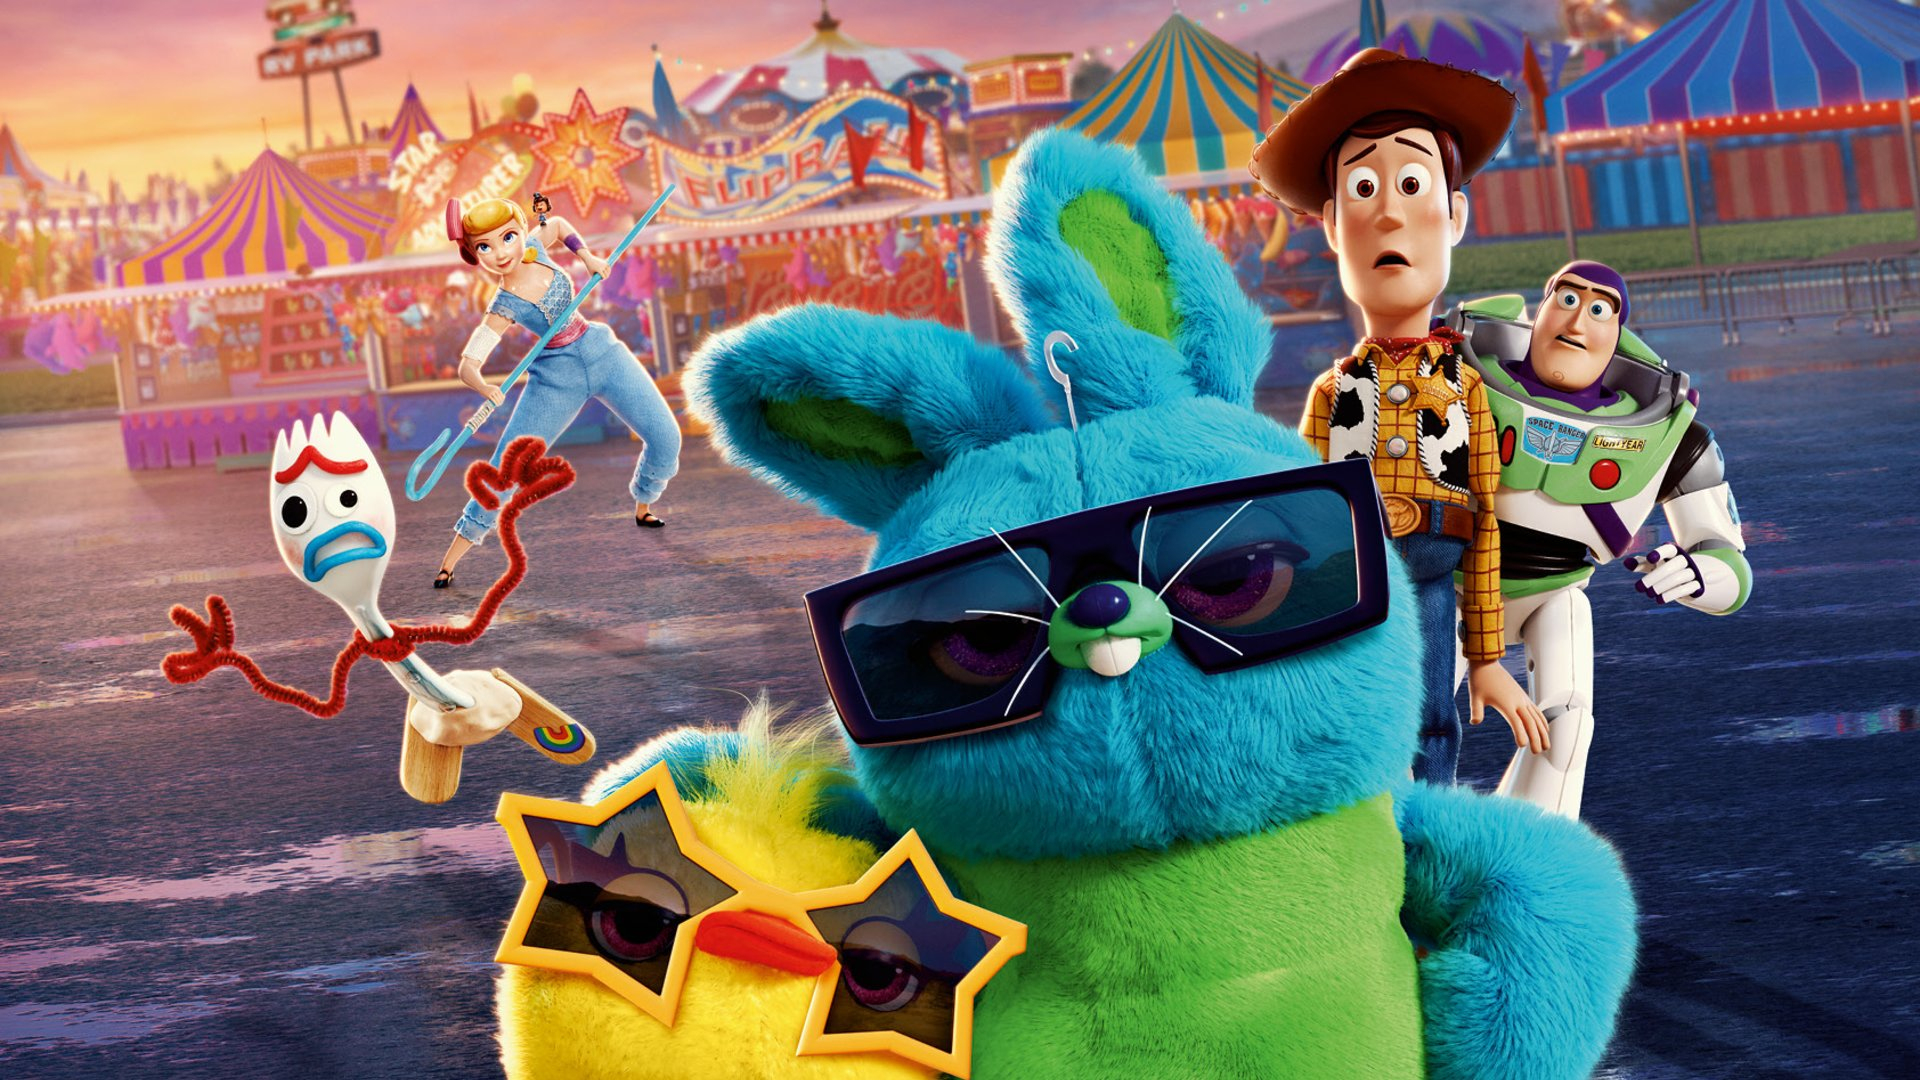 Animationsfilme 2017-2020: Highlights Von Pixar, Disney pour Film D Animation Dreamworks